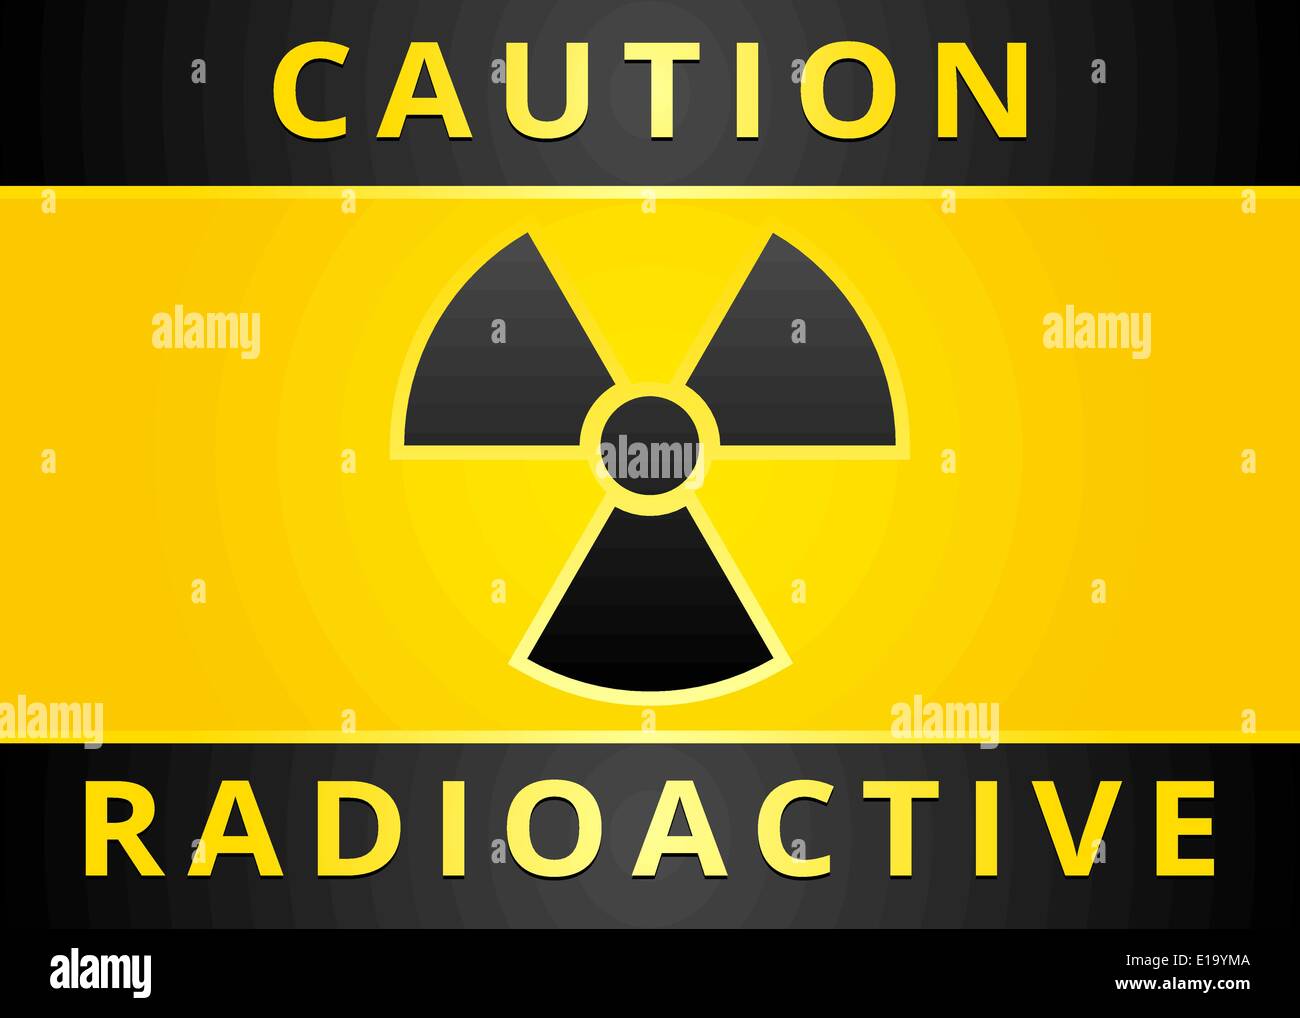 6-2" x 2" Nuclear Radiation sign decal warning symbol bio hazard stick